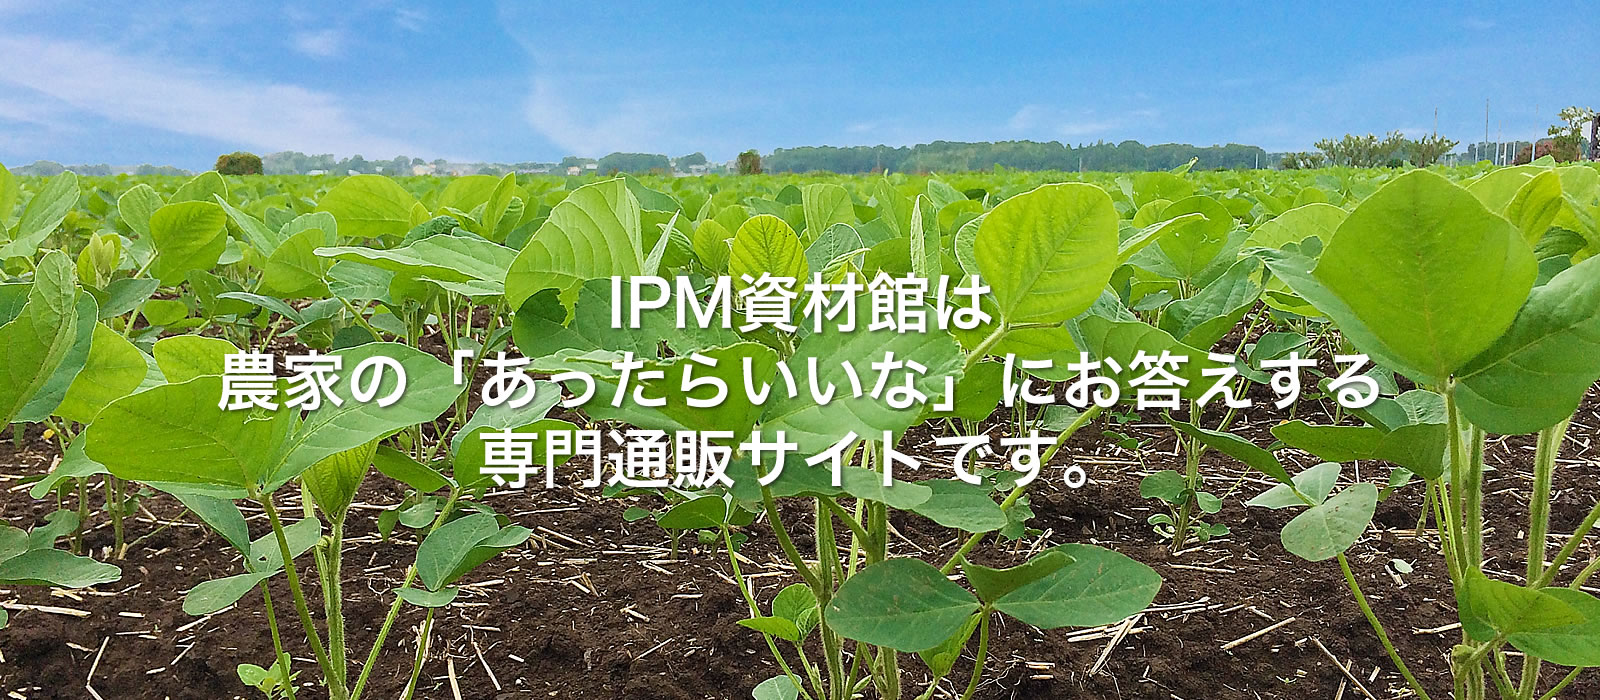 IPM資材館は 異常気象にも負けない差別化出荷を可能にする 専門通販サイトです。